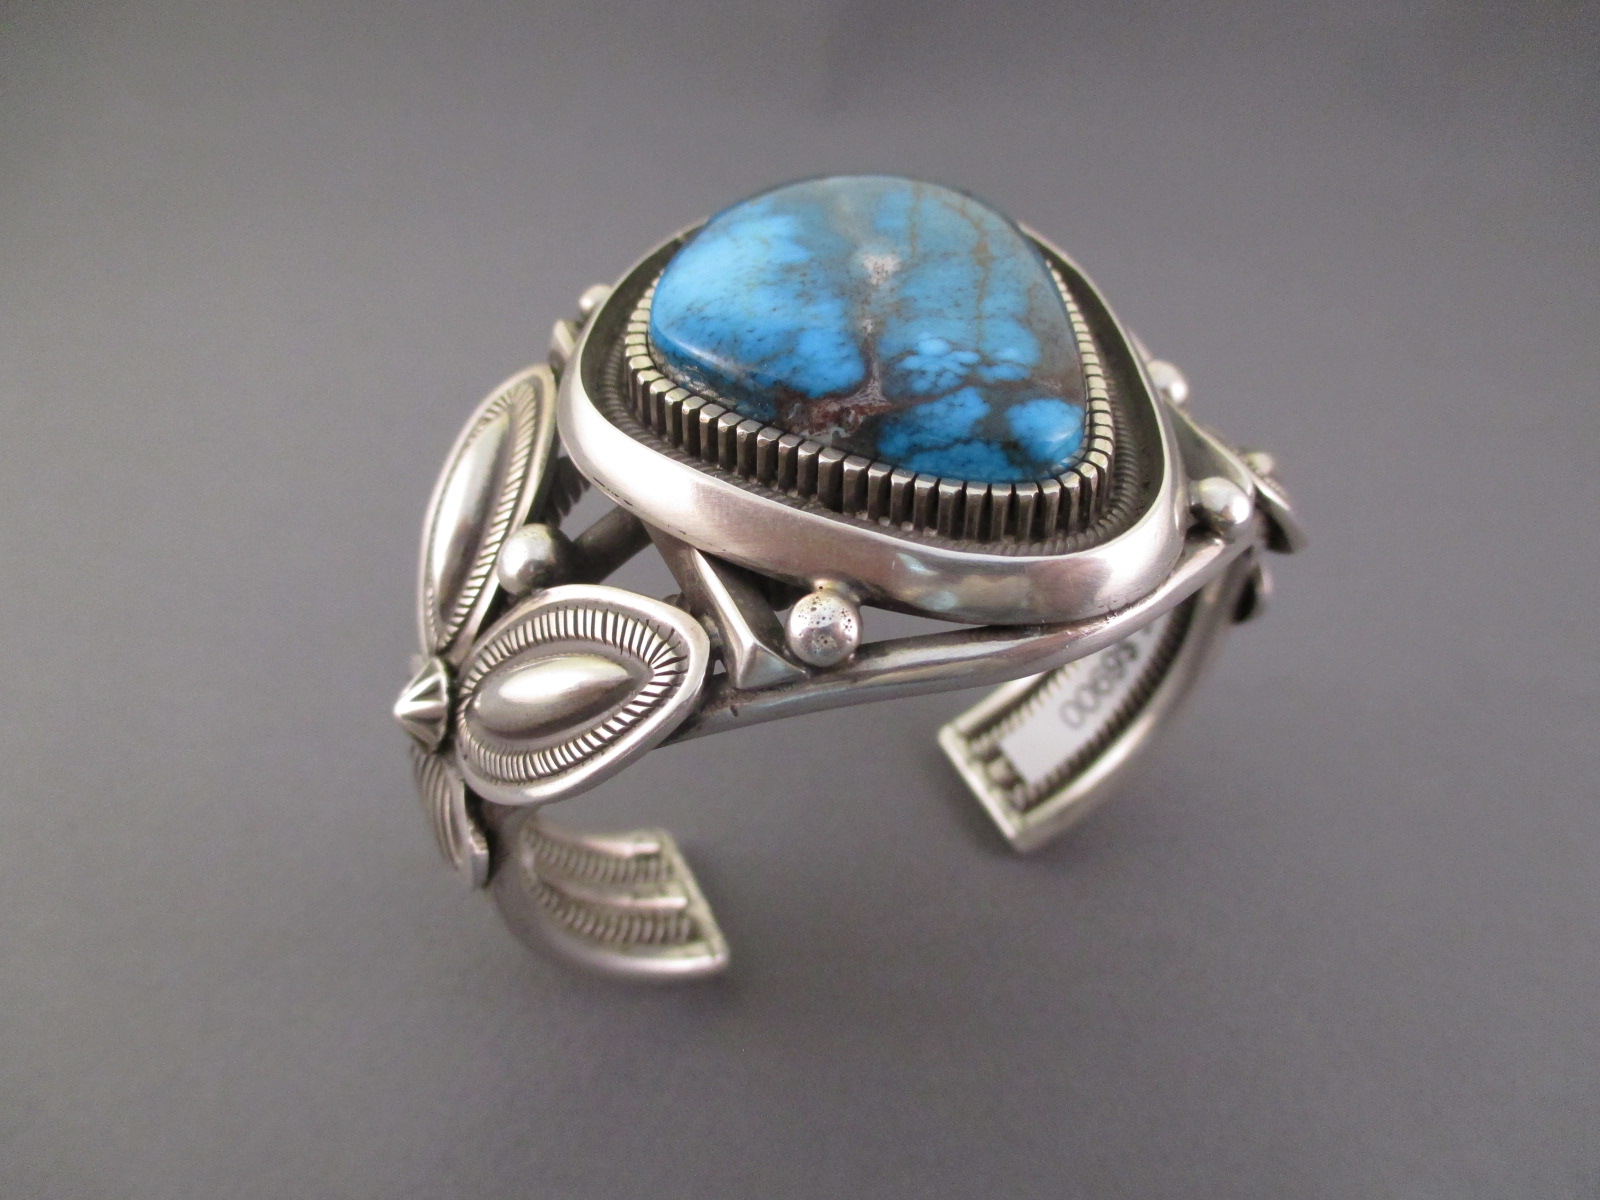 Bisbee Turquoise Cuff Bracelet by Terry Martinez